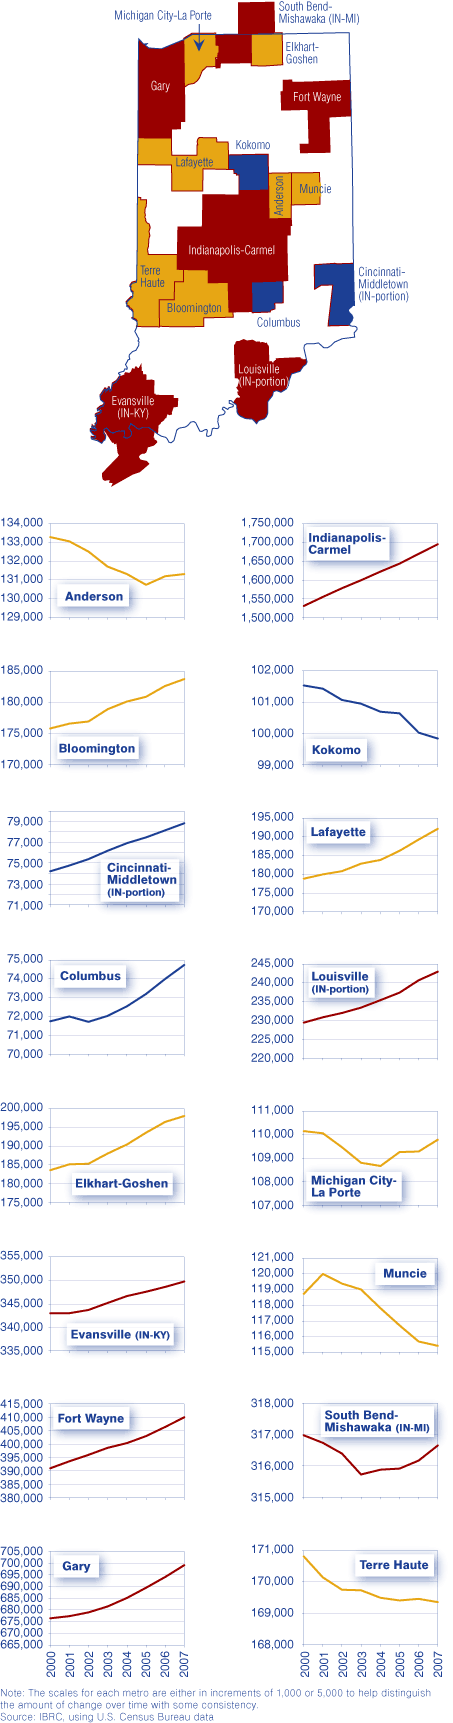 Metro Population Trends, 2000 to 2007